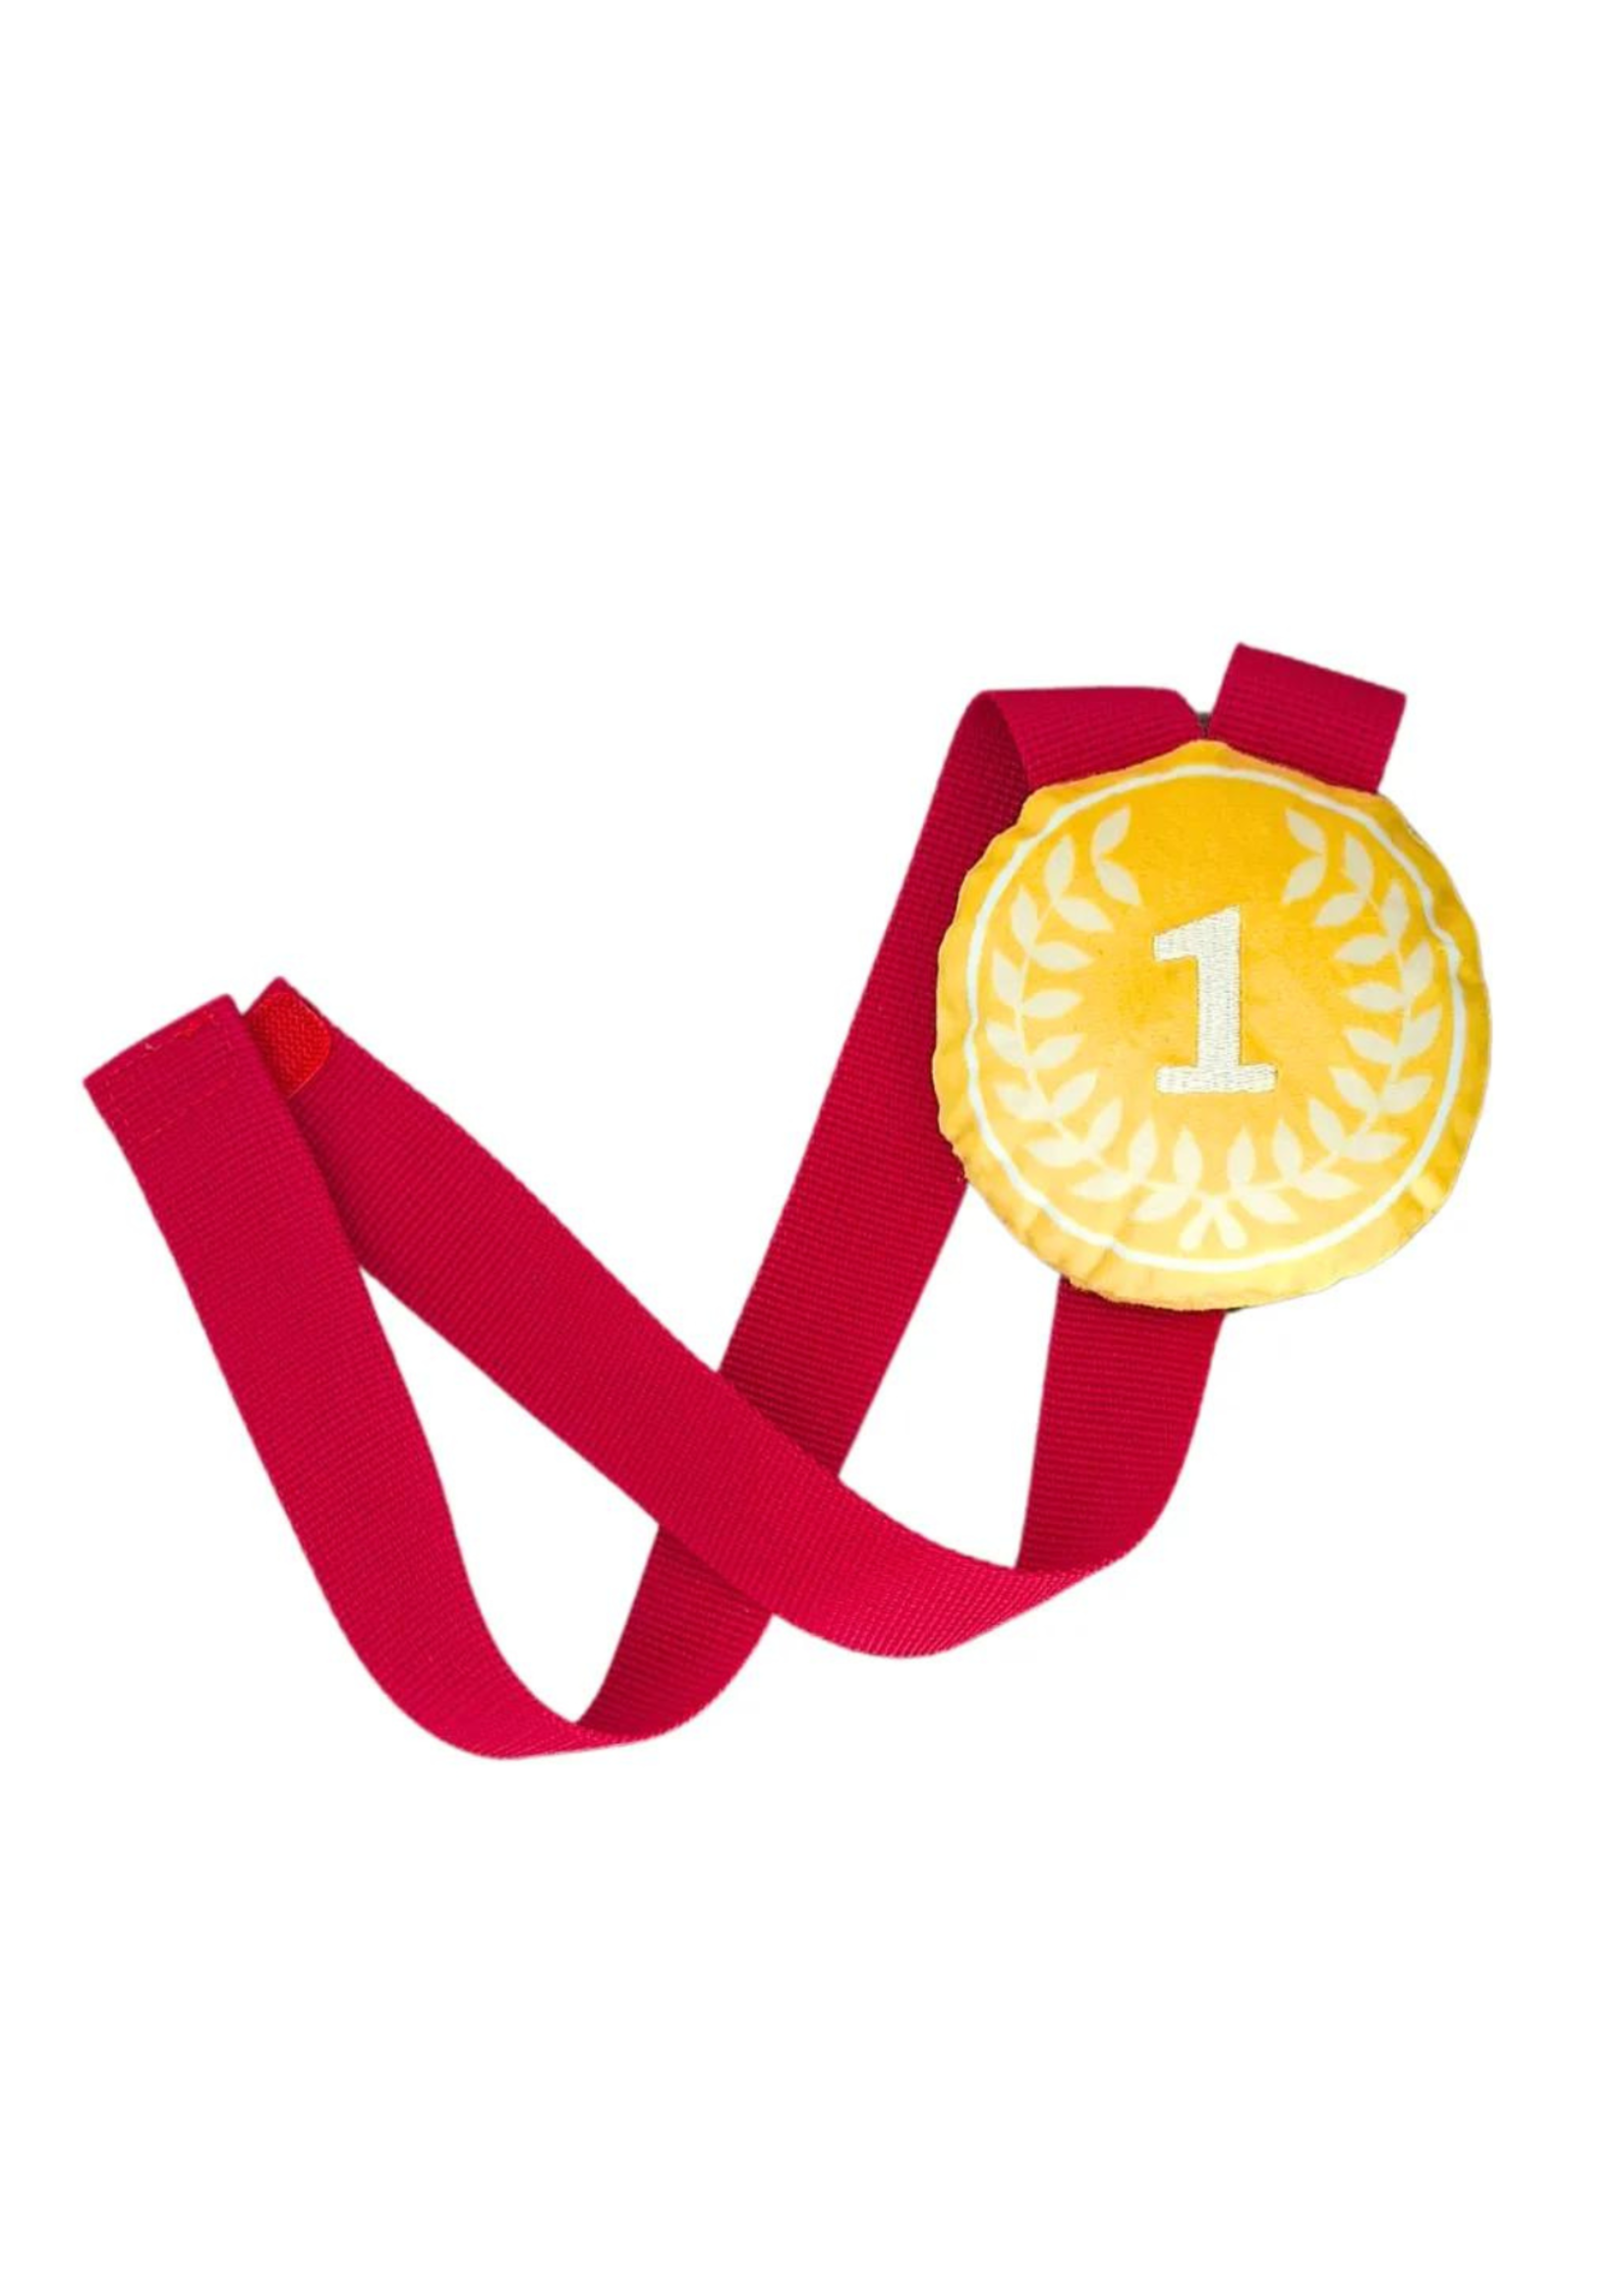 Pawstory - Doglympic gold medal